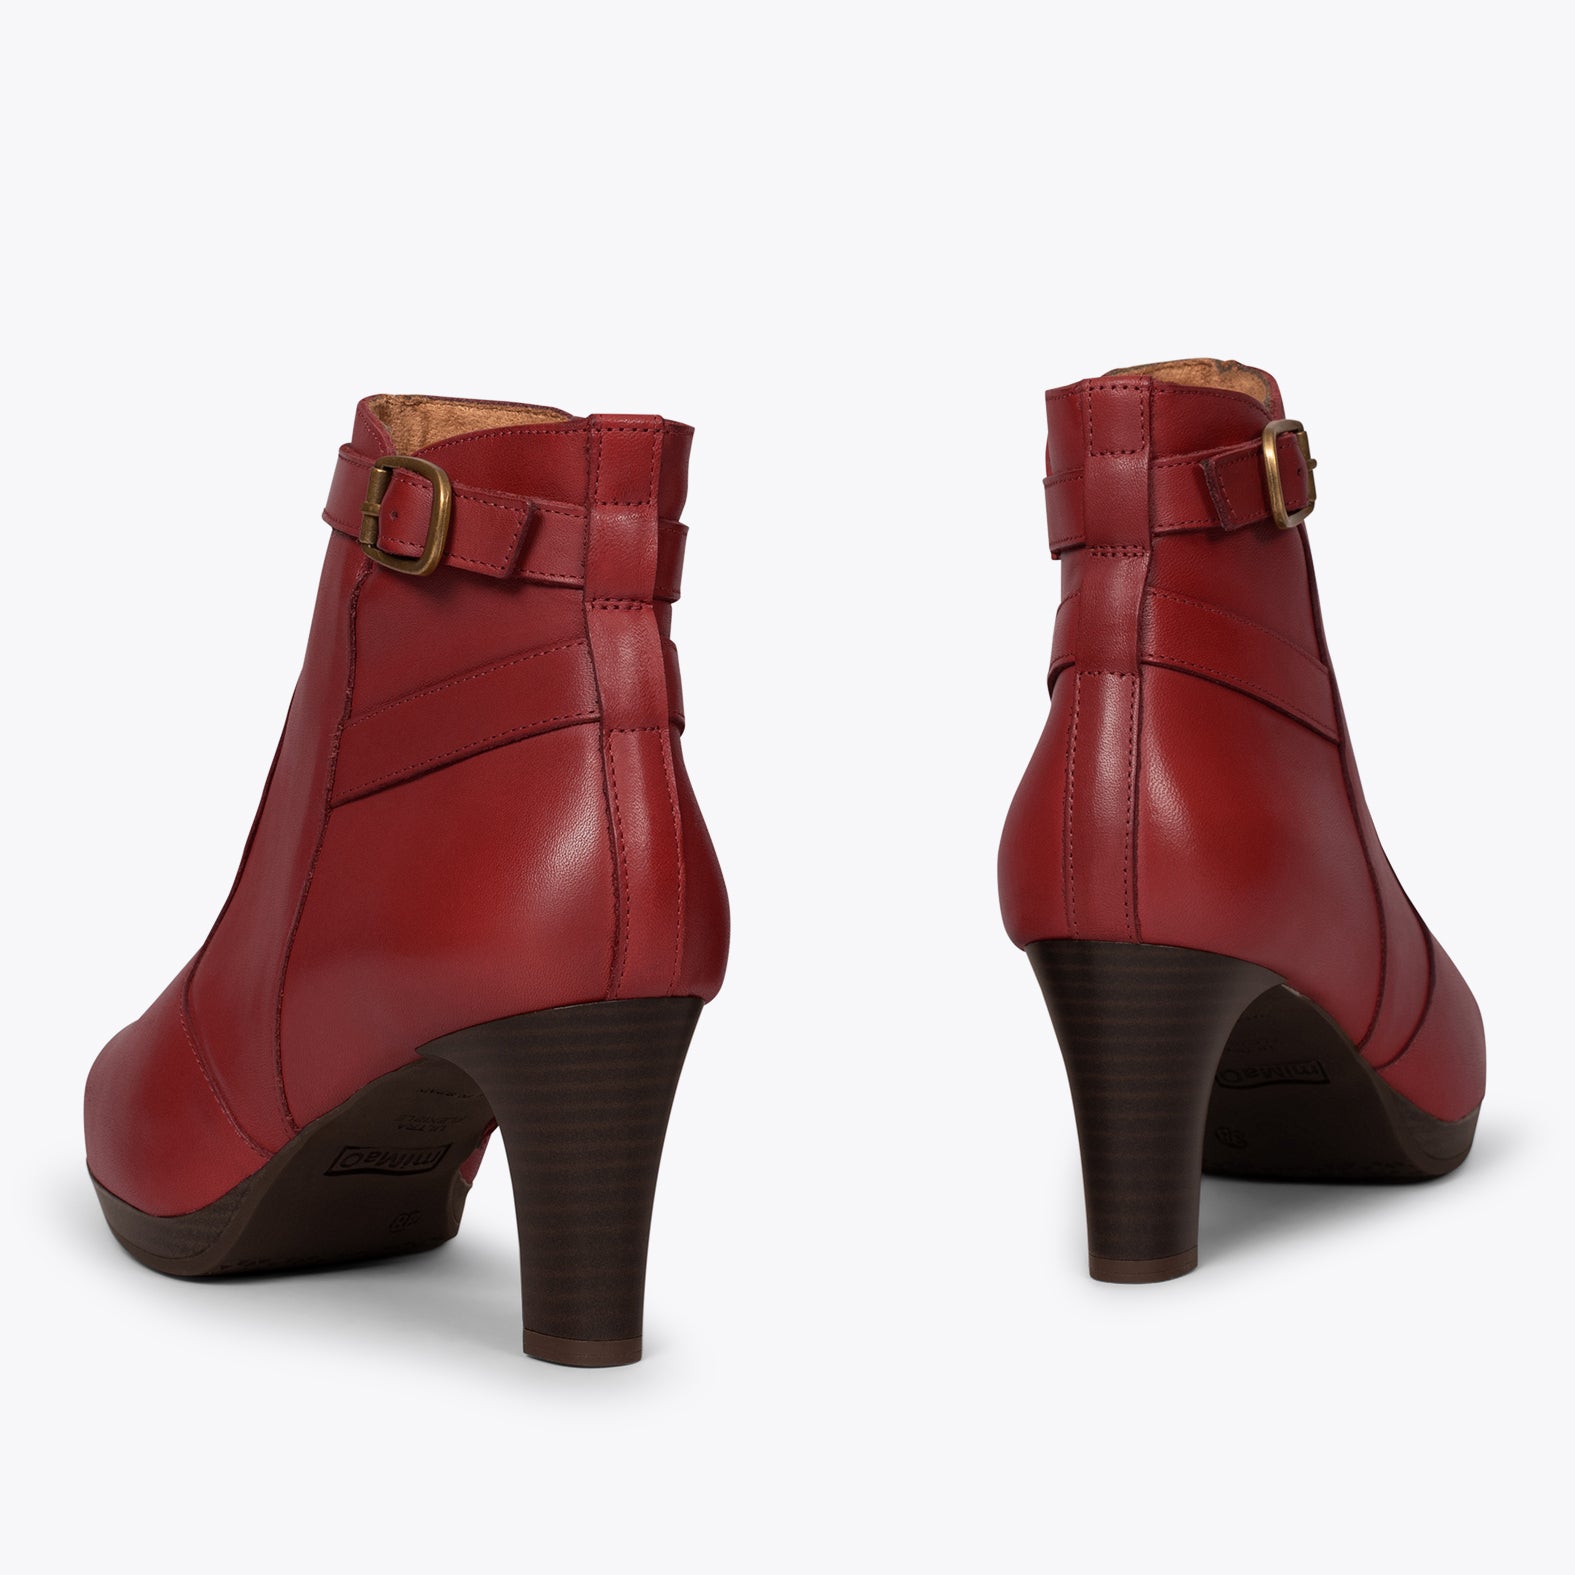 MILAN - BURGUNDY high heel elegant booties